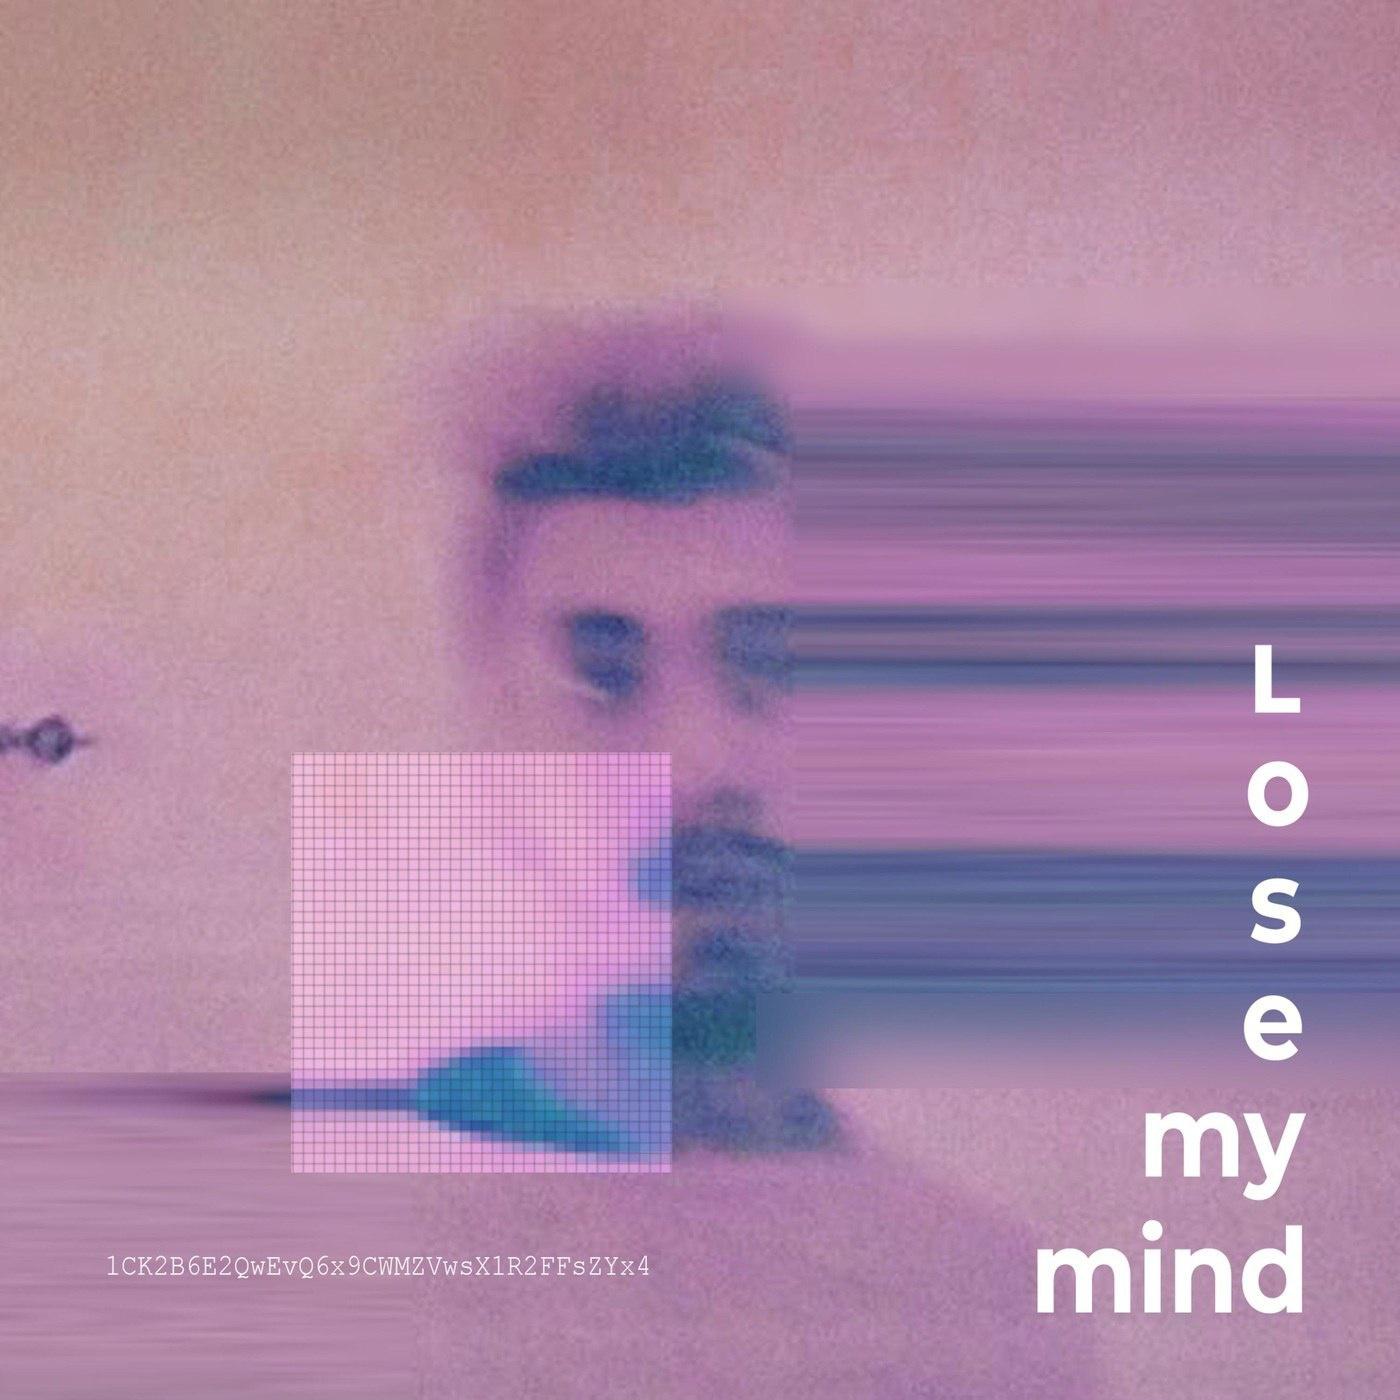 Lose My Mind (Original Mix)